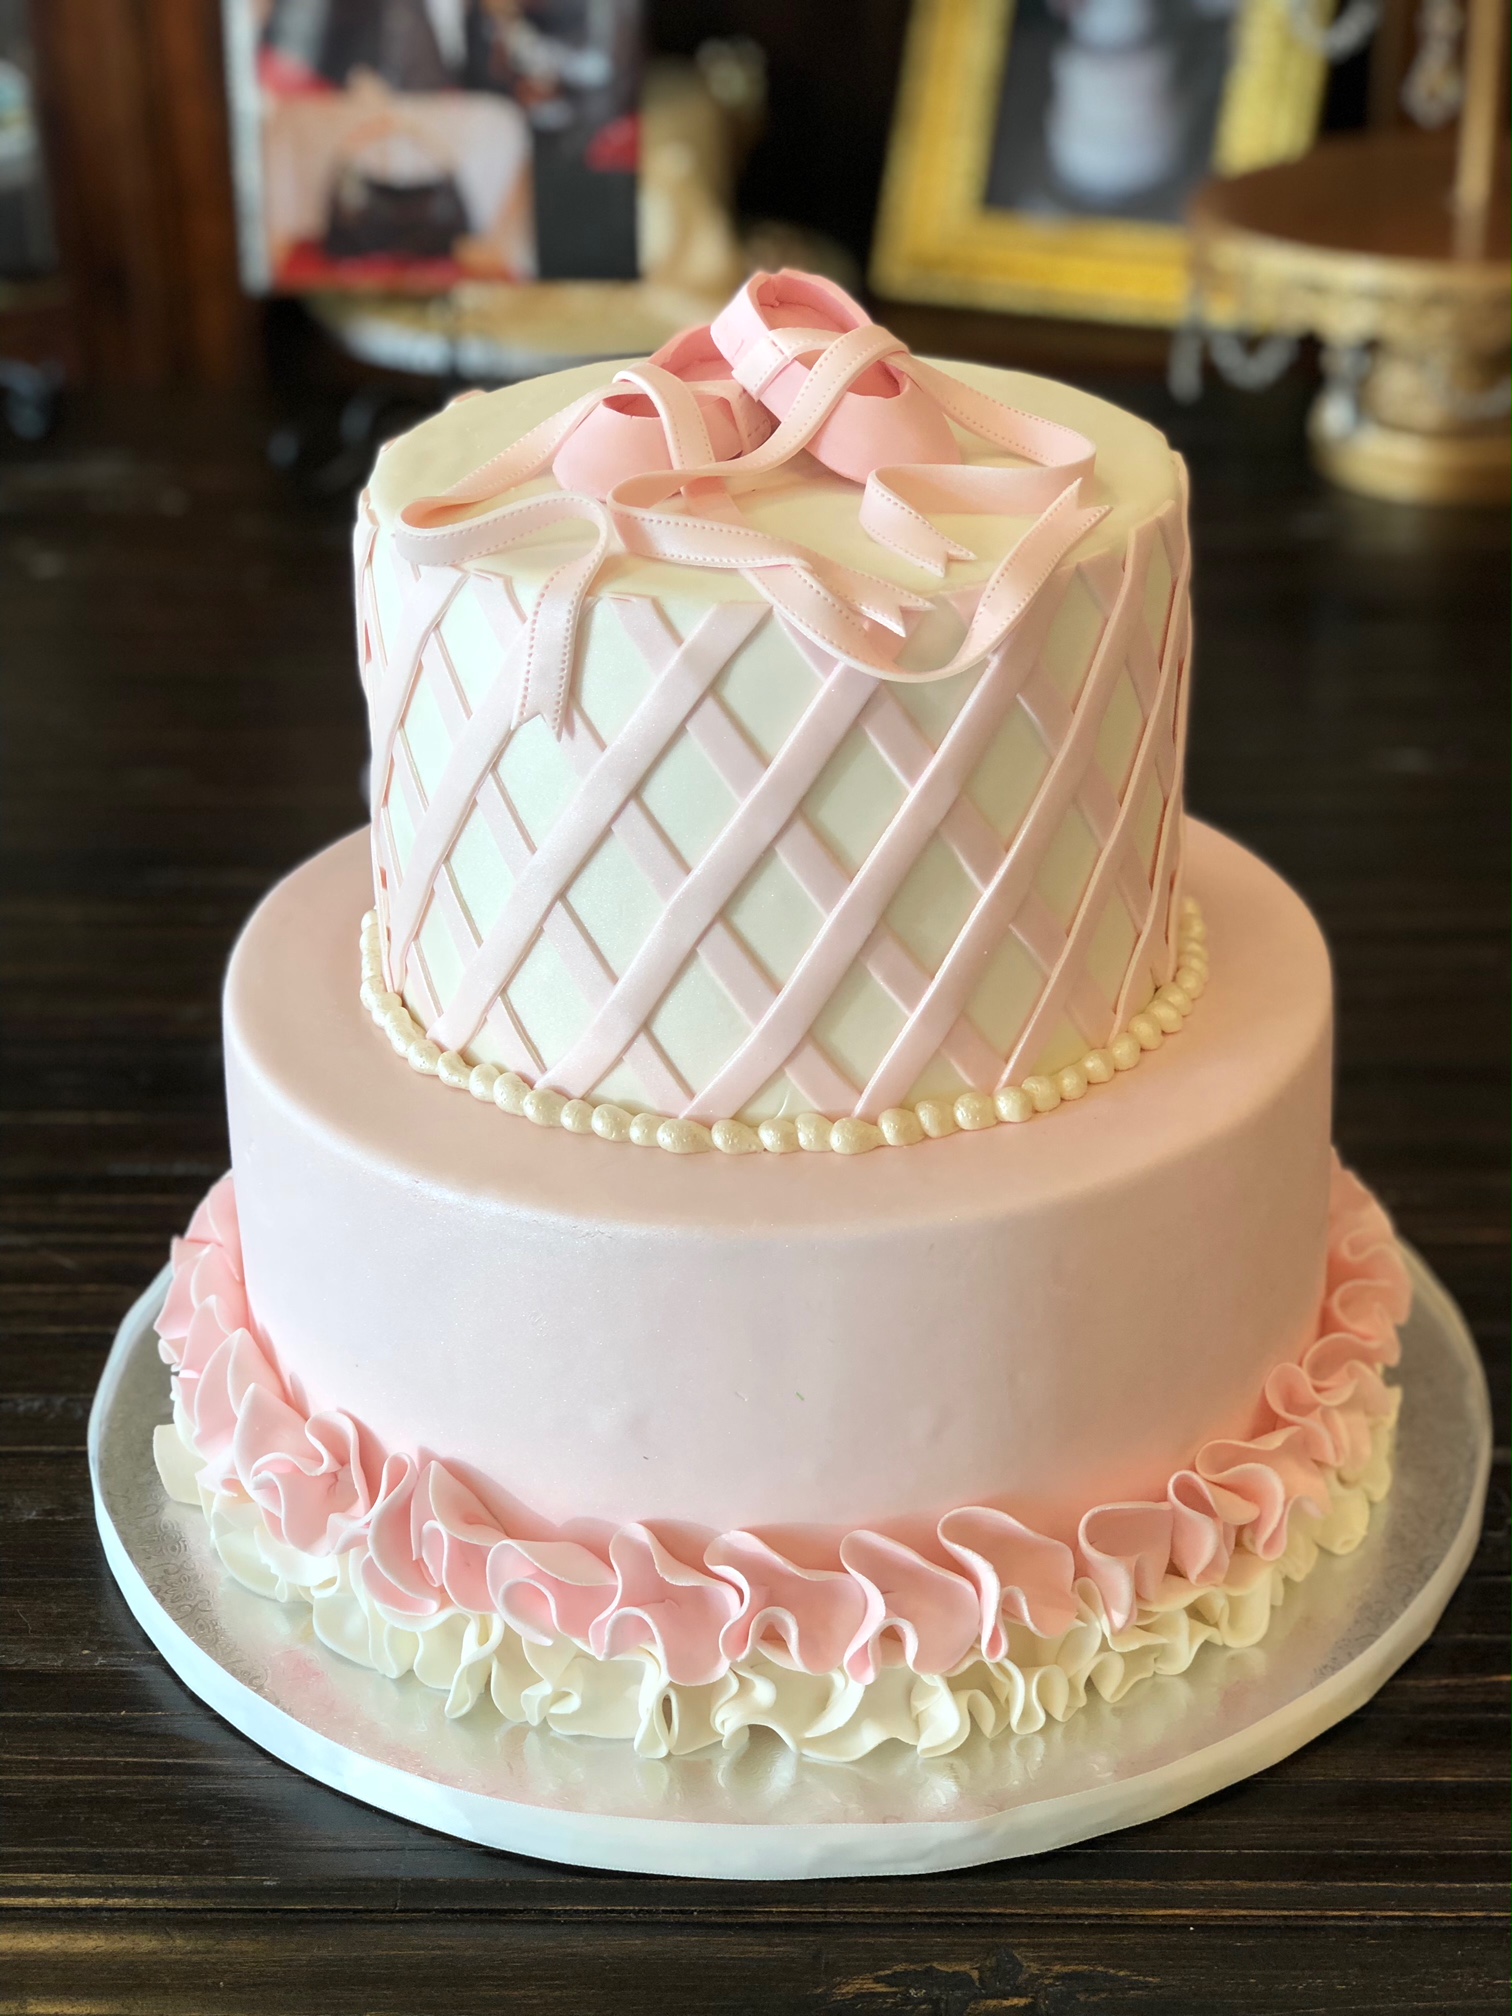 Fancy Cakes by Lauren - Wedding Cakes & Pastries - Dallas, TX